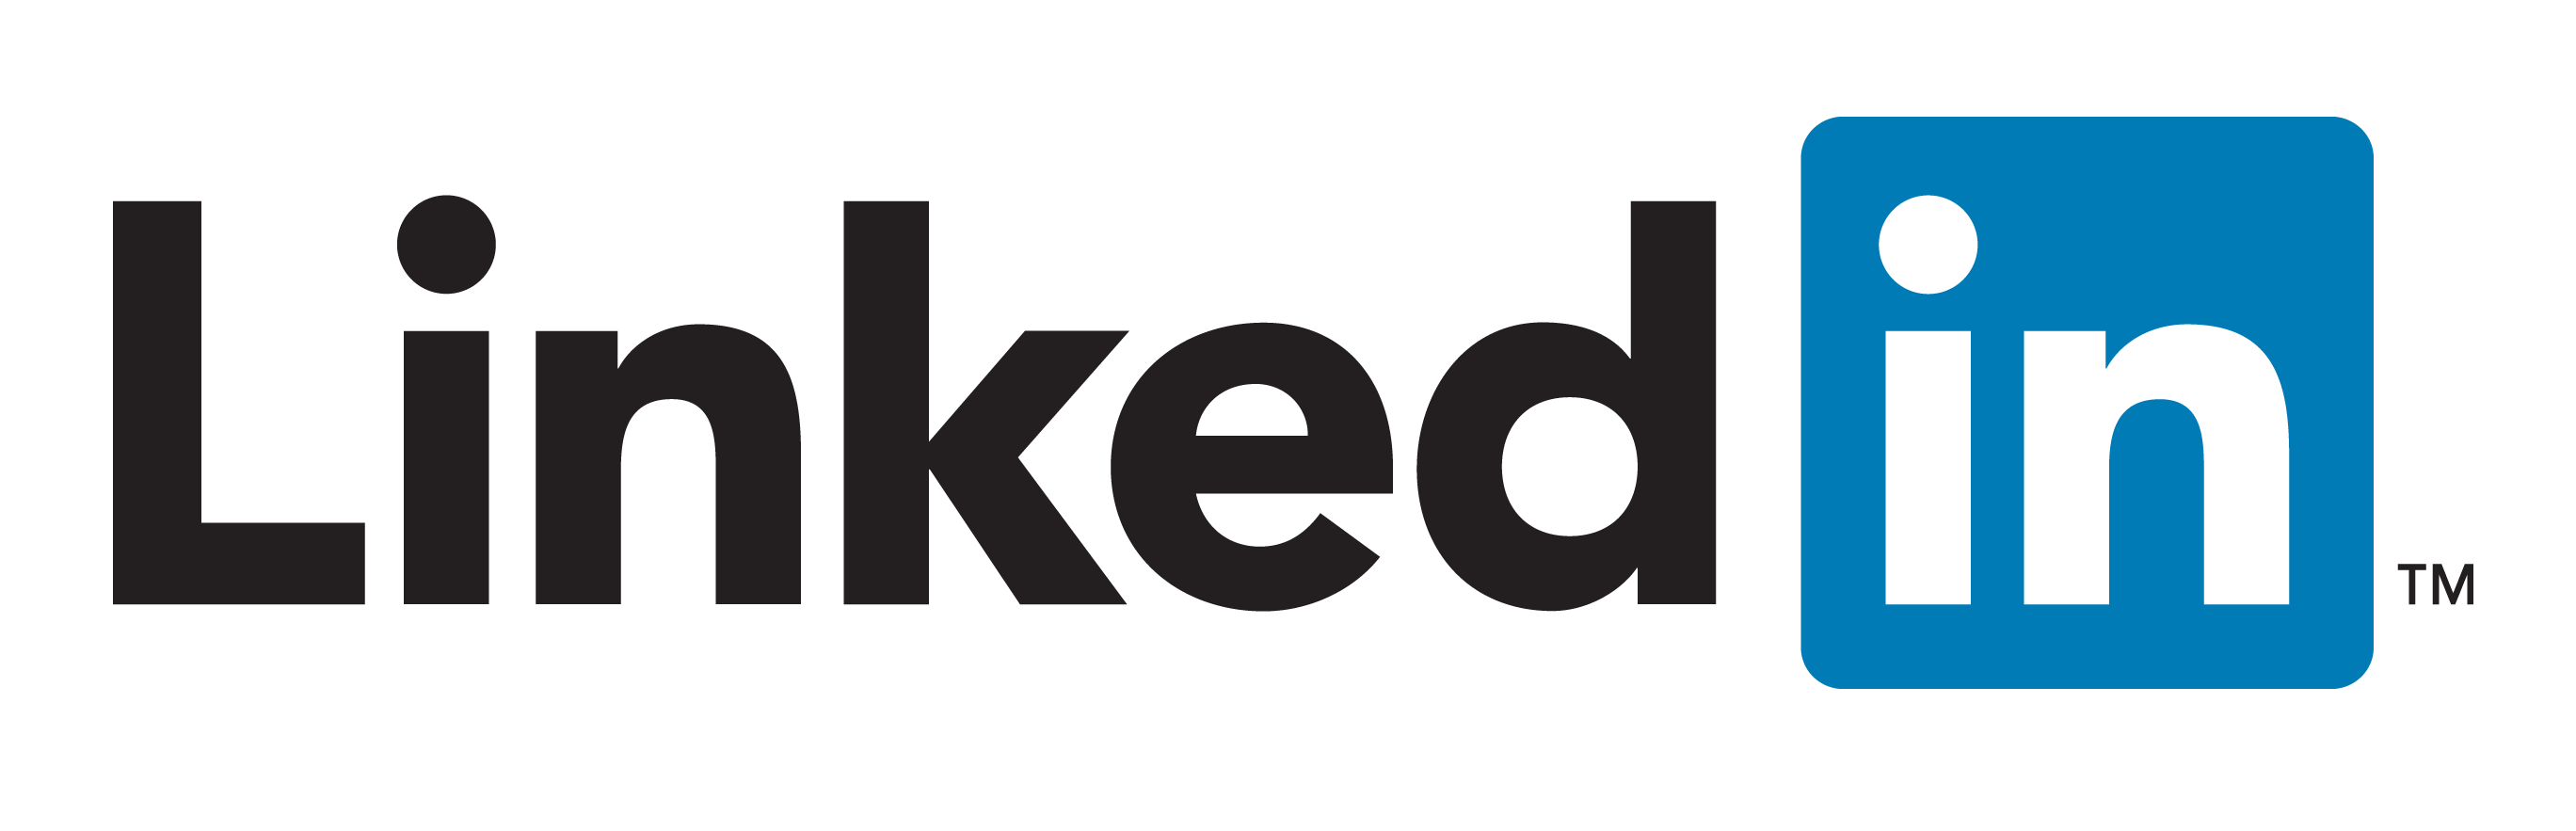 LinkedIn-Logo